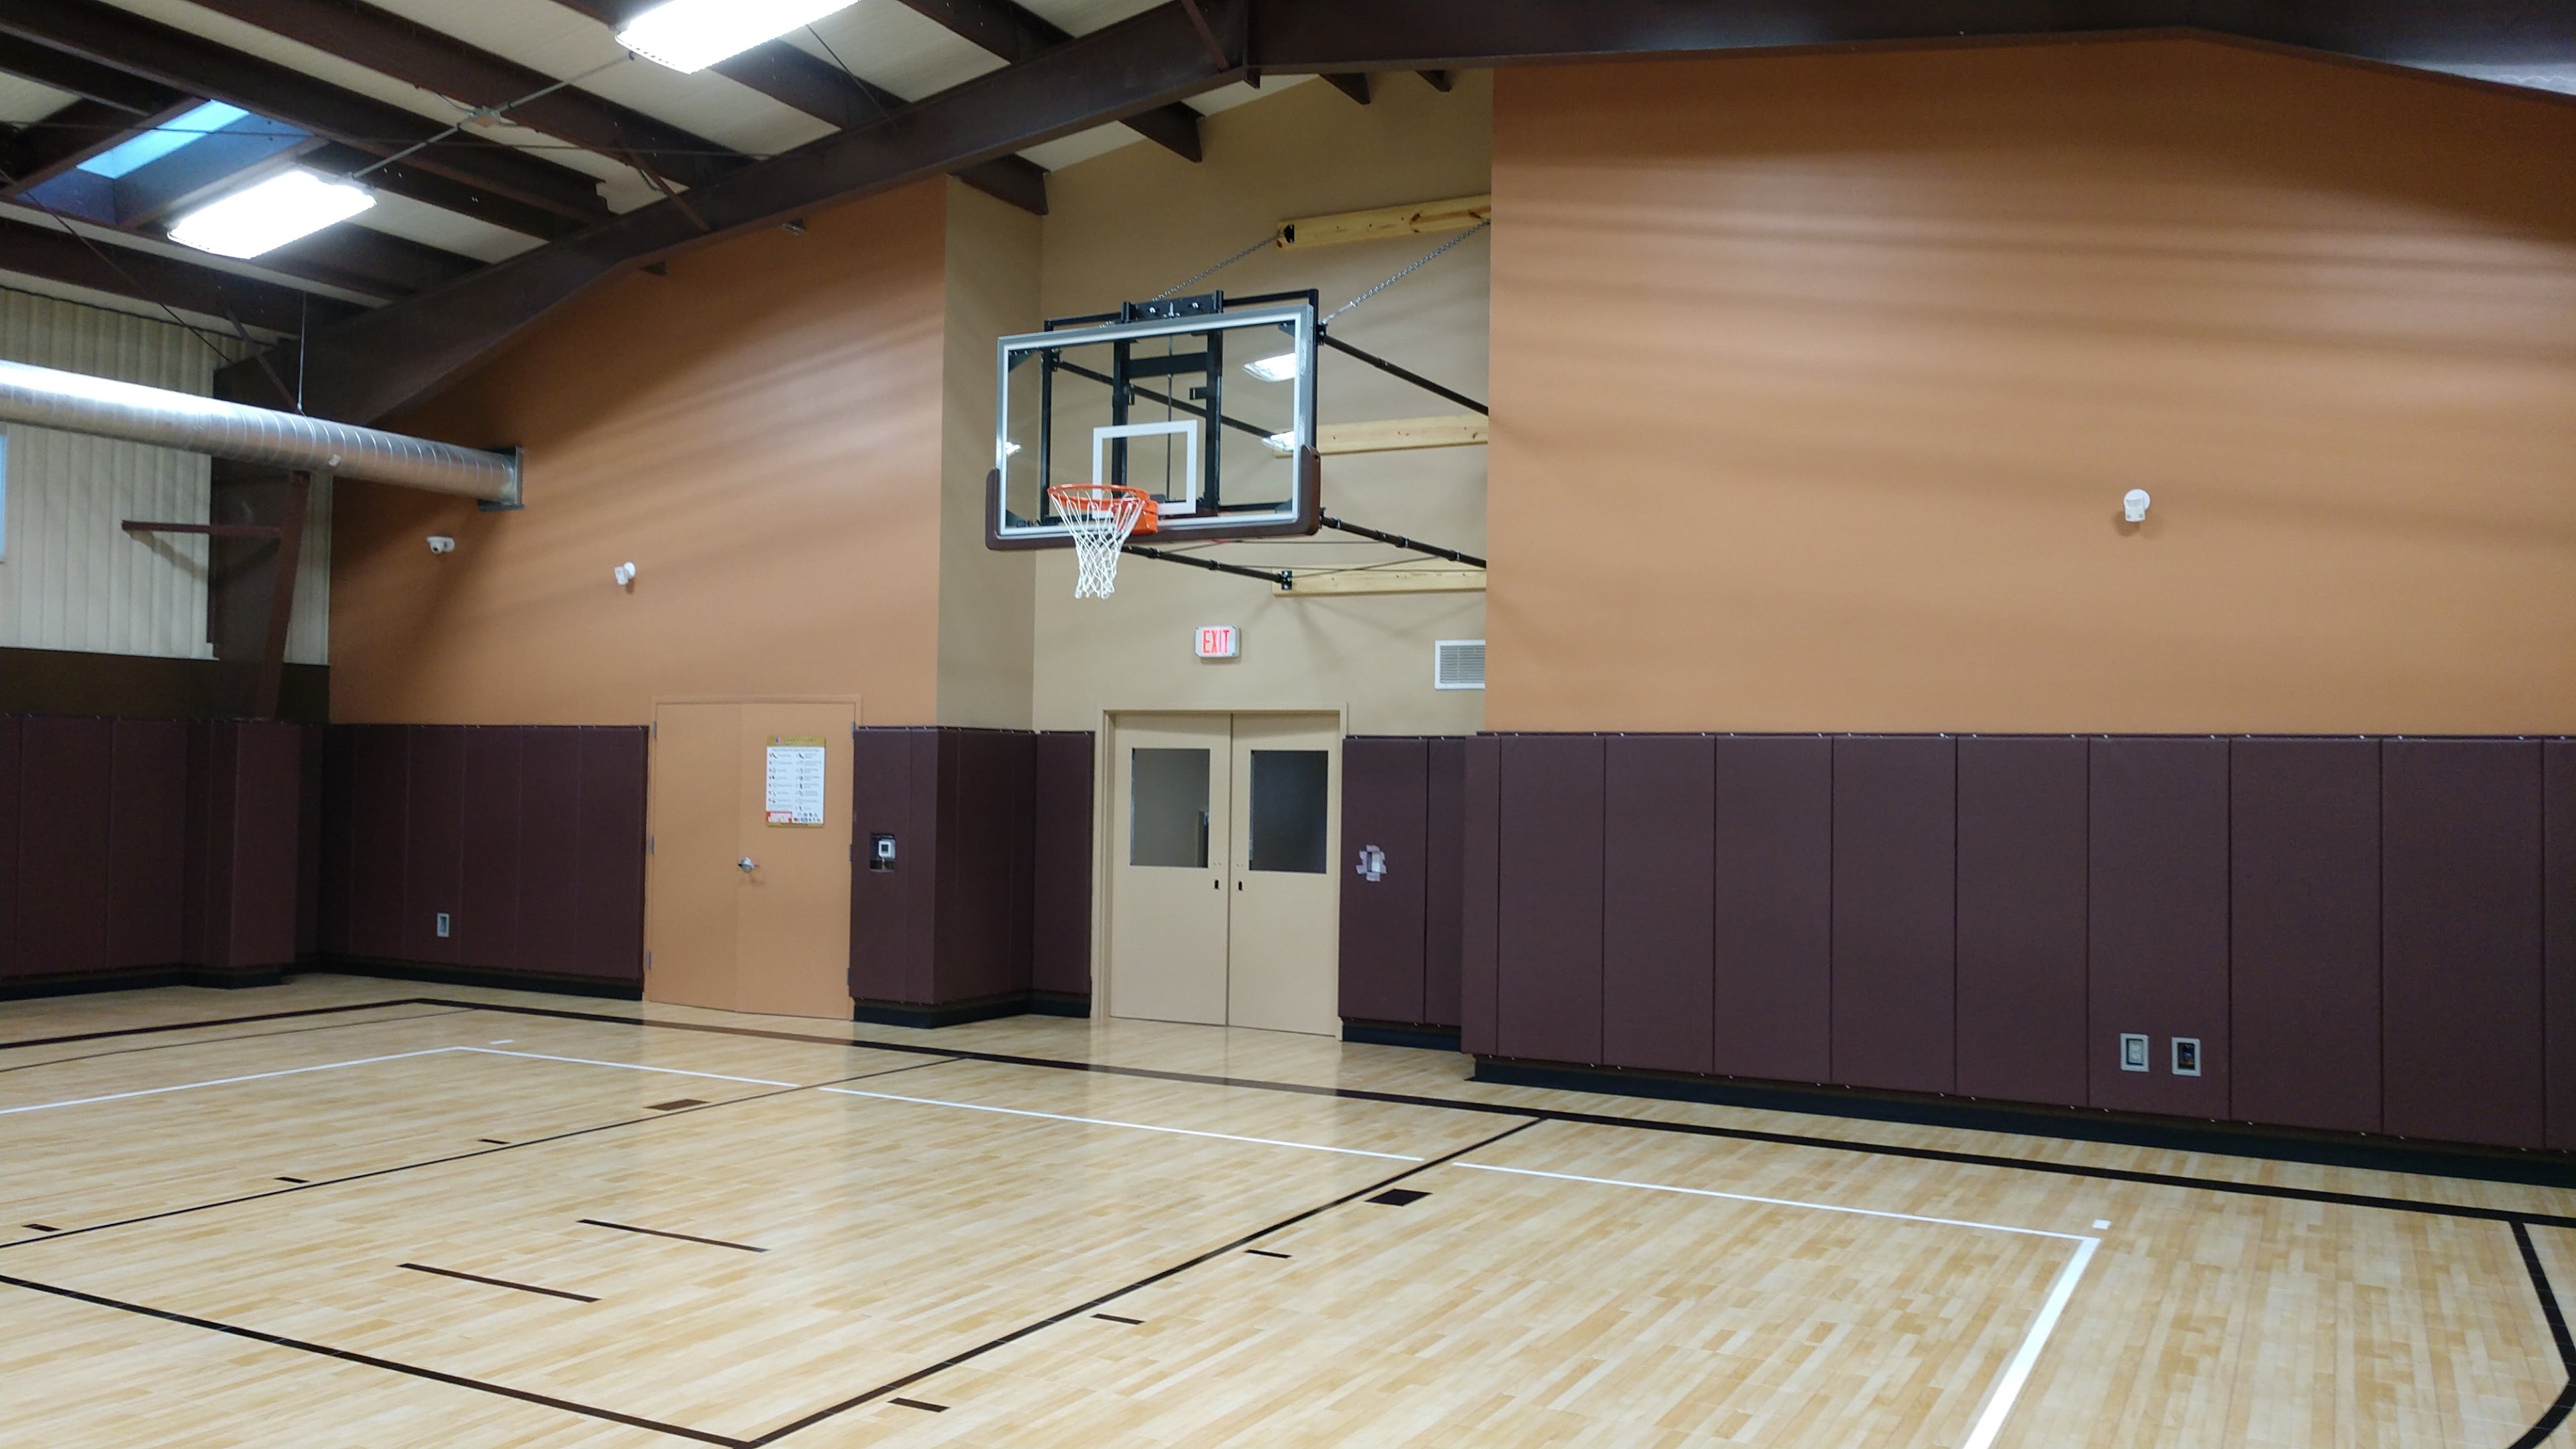 AK Athletics gym wall padding, 6' tall gym wall padding, gym wall pads, brown basketball wall mats, wall mats for gym, gymnasium wall padding